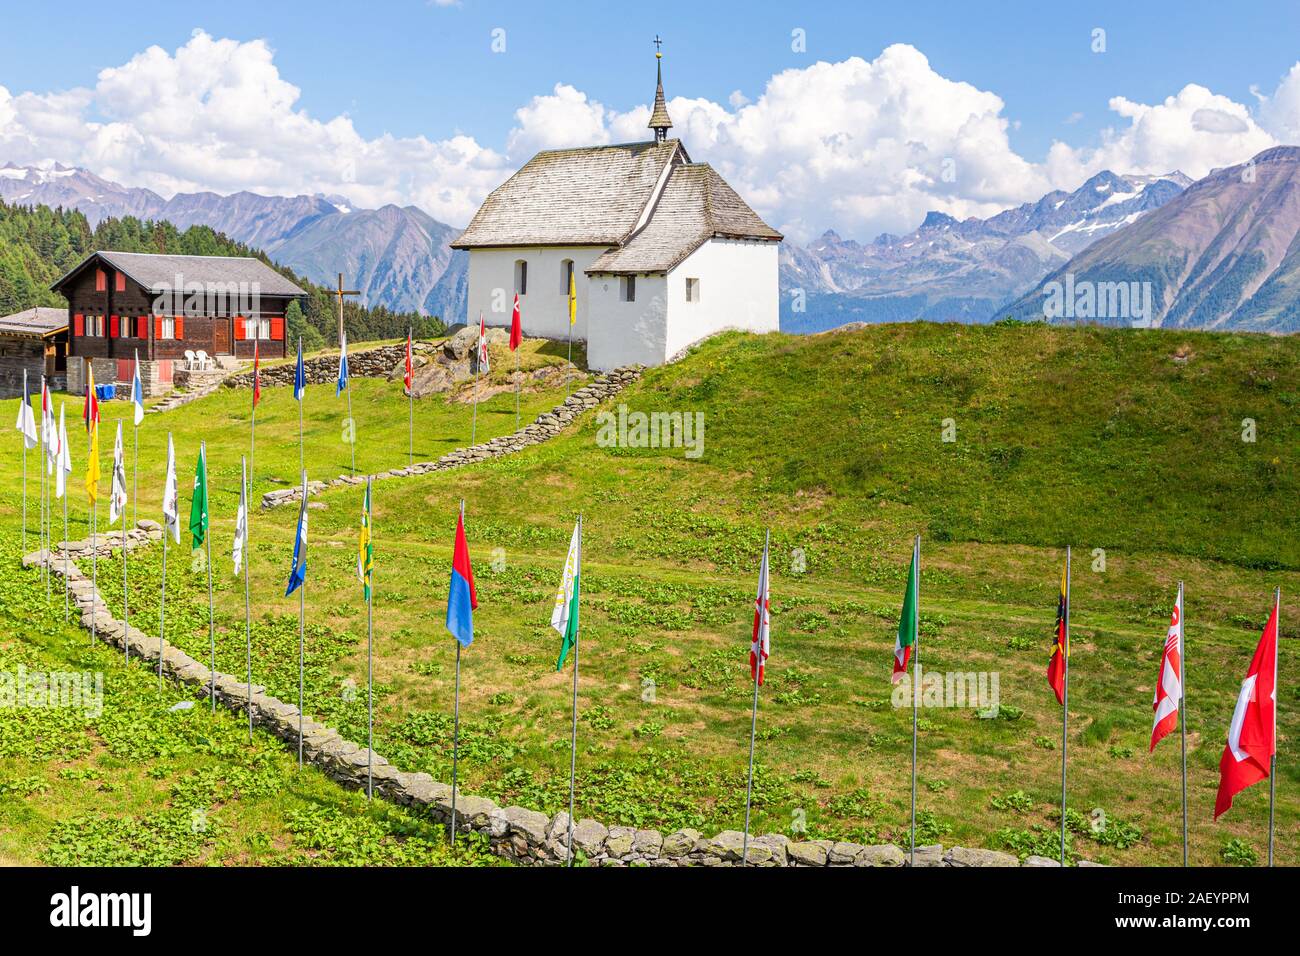 Bettmeralp church and flags in the Swiss Alps, Valais, Switzerland Stock Photo